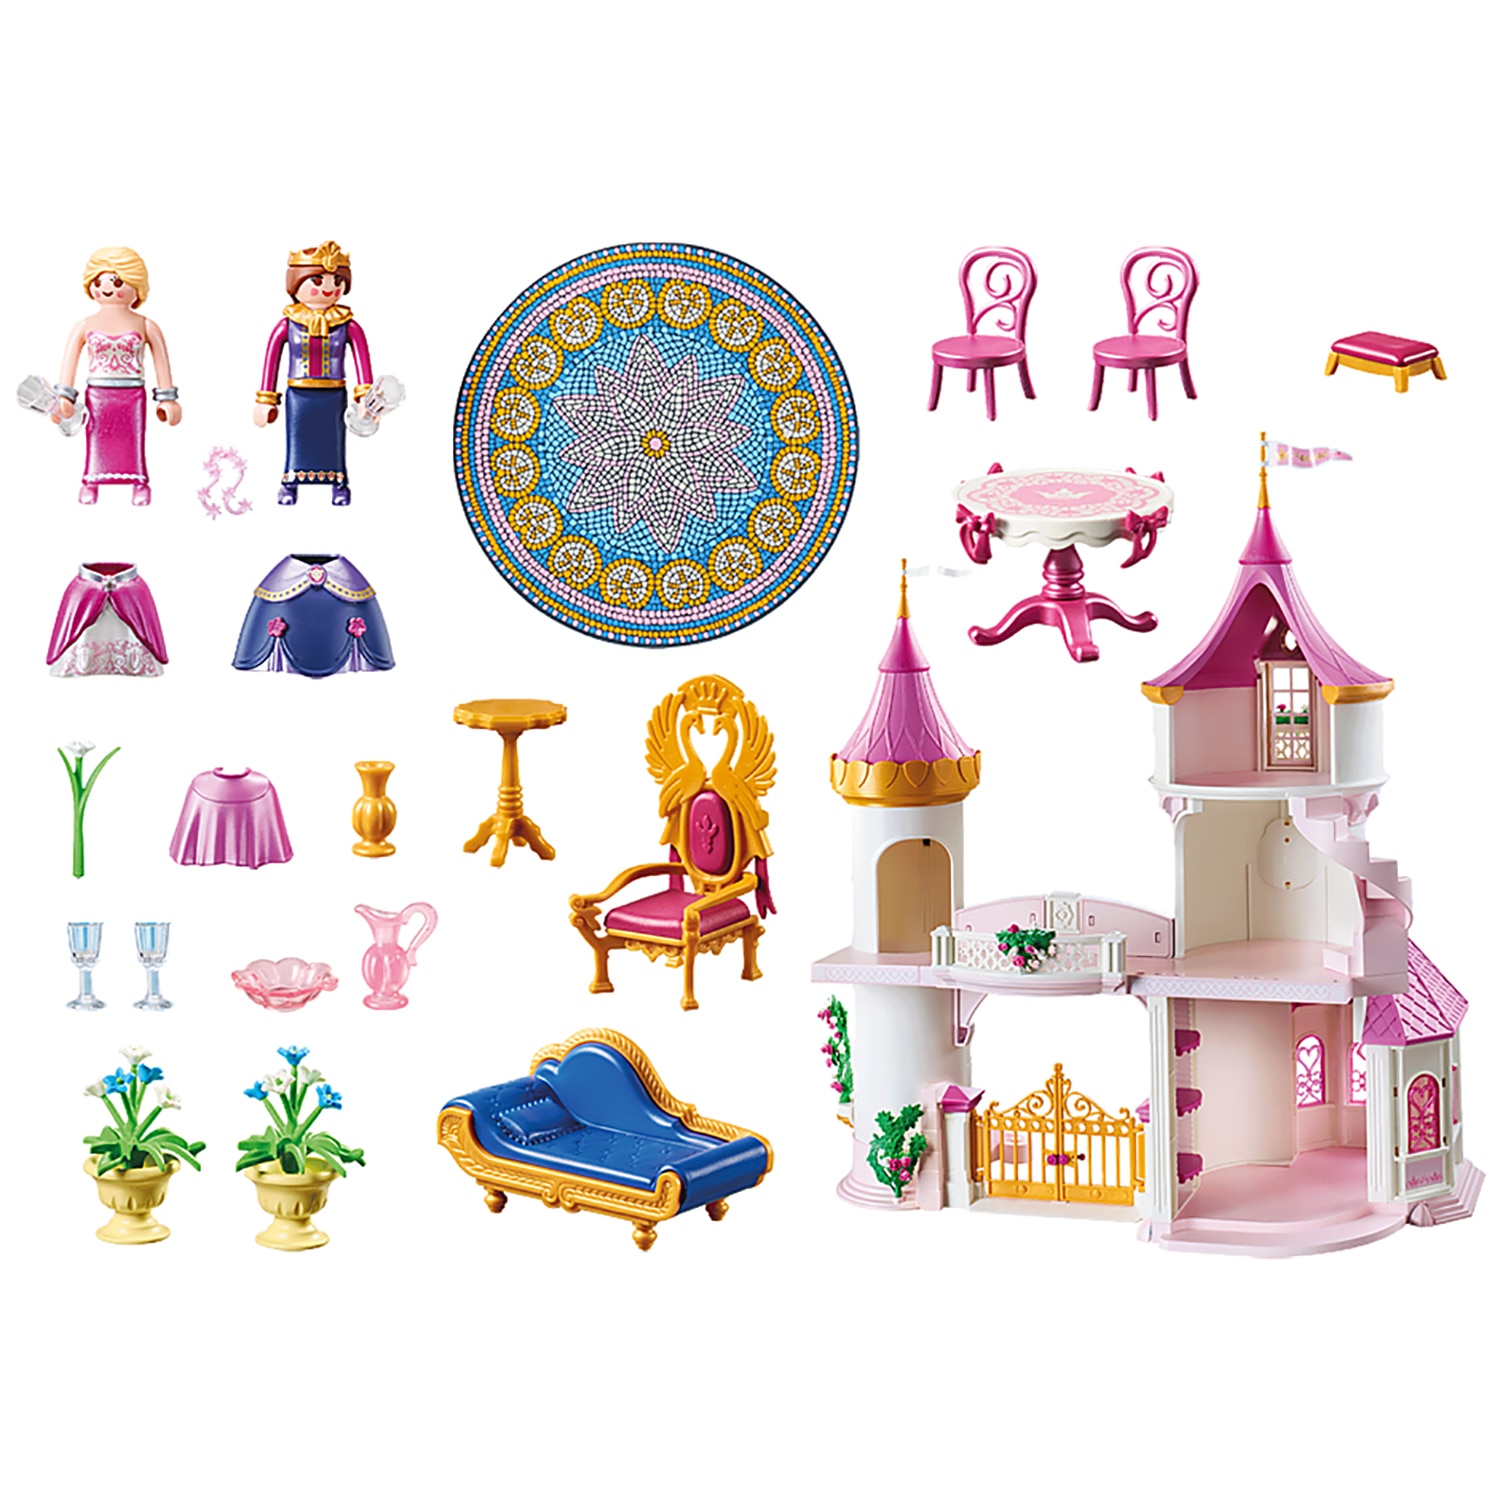 Playmobil Princess Замъкът на принцесата Emagbg